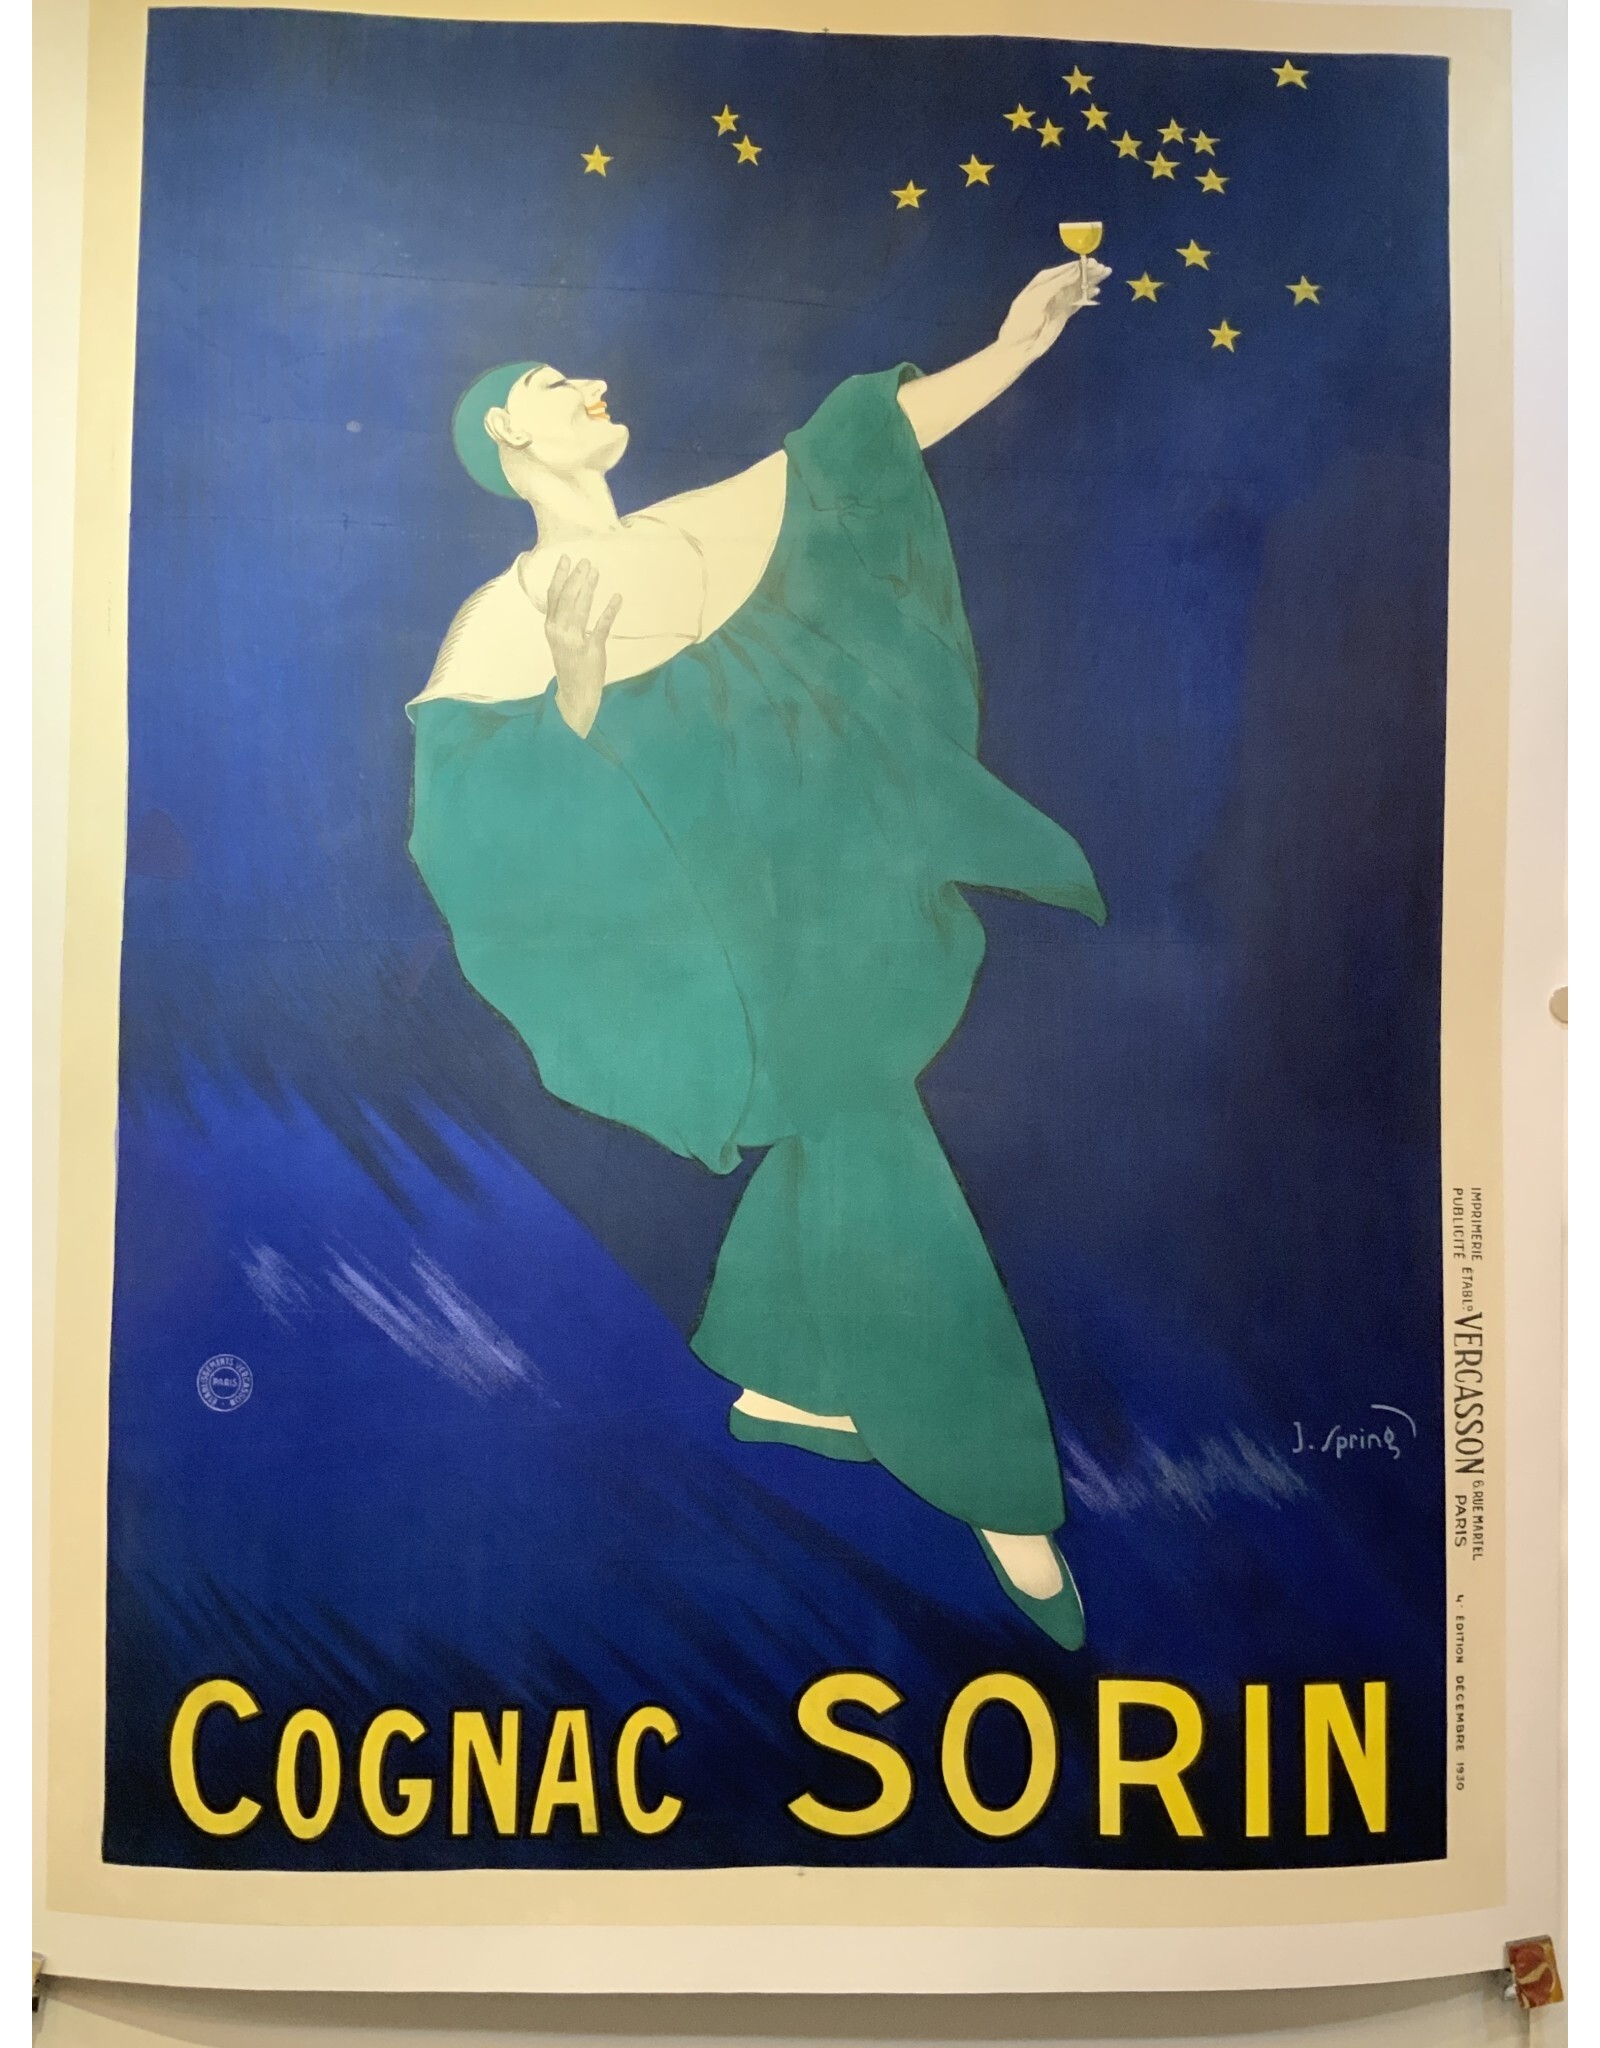 SPV Cognac Sorin. 1930